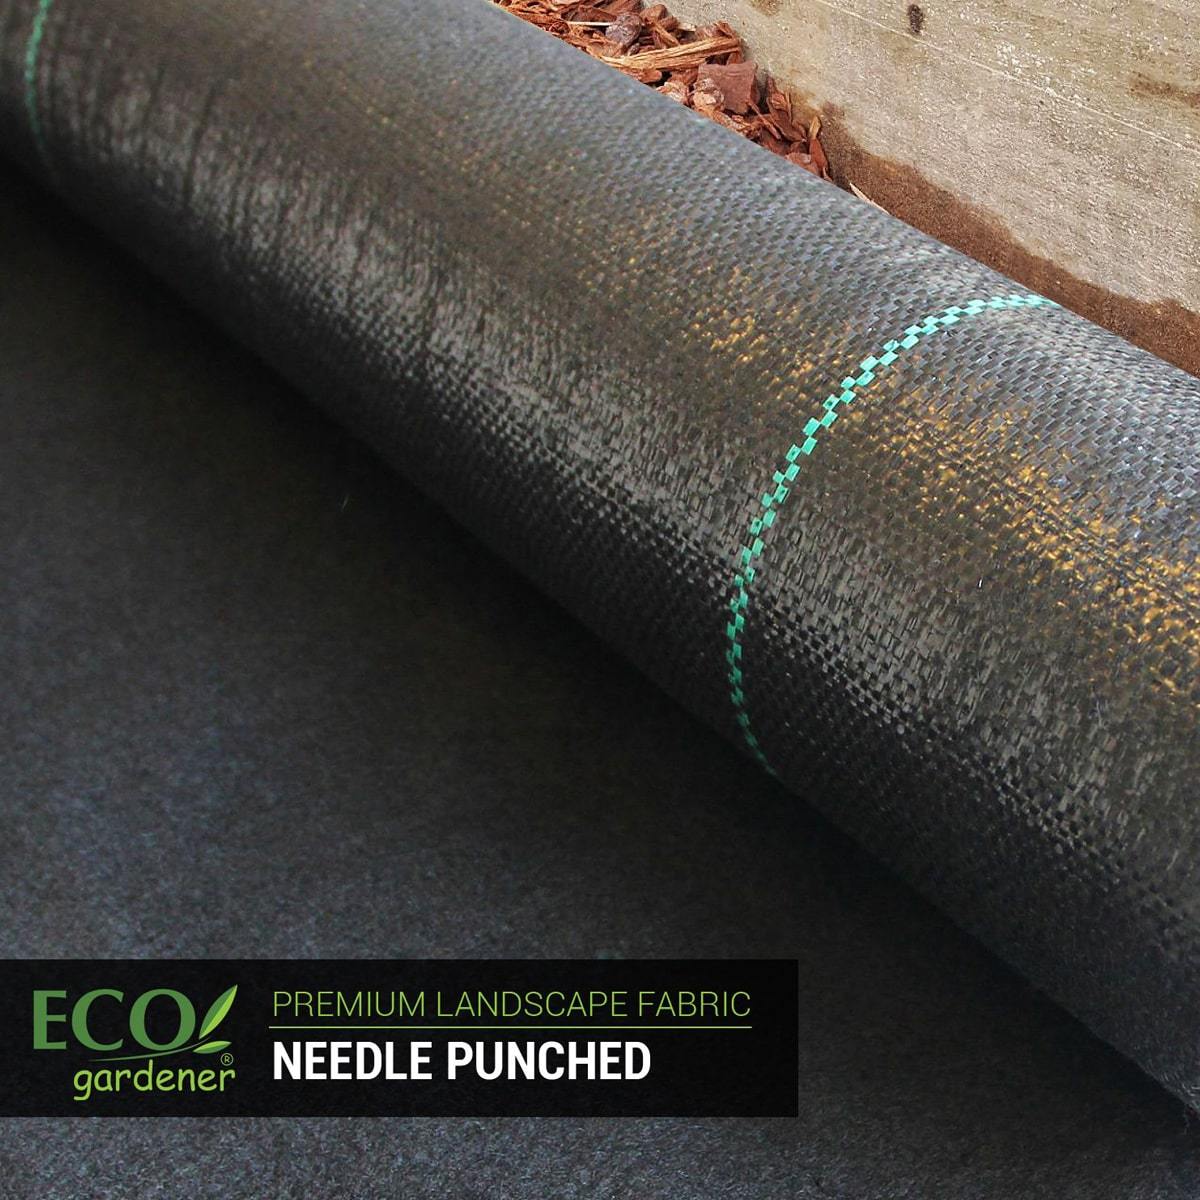 A closeup picture of Ecogardener landscape fabric